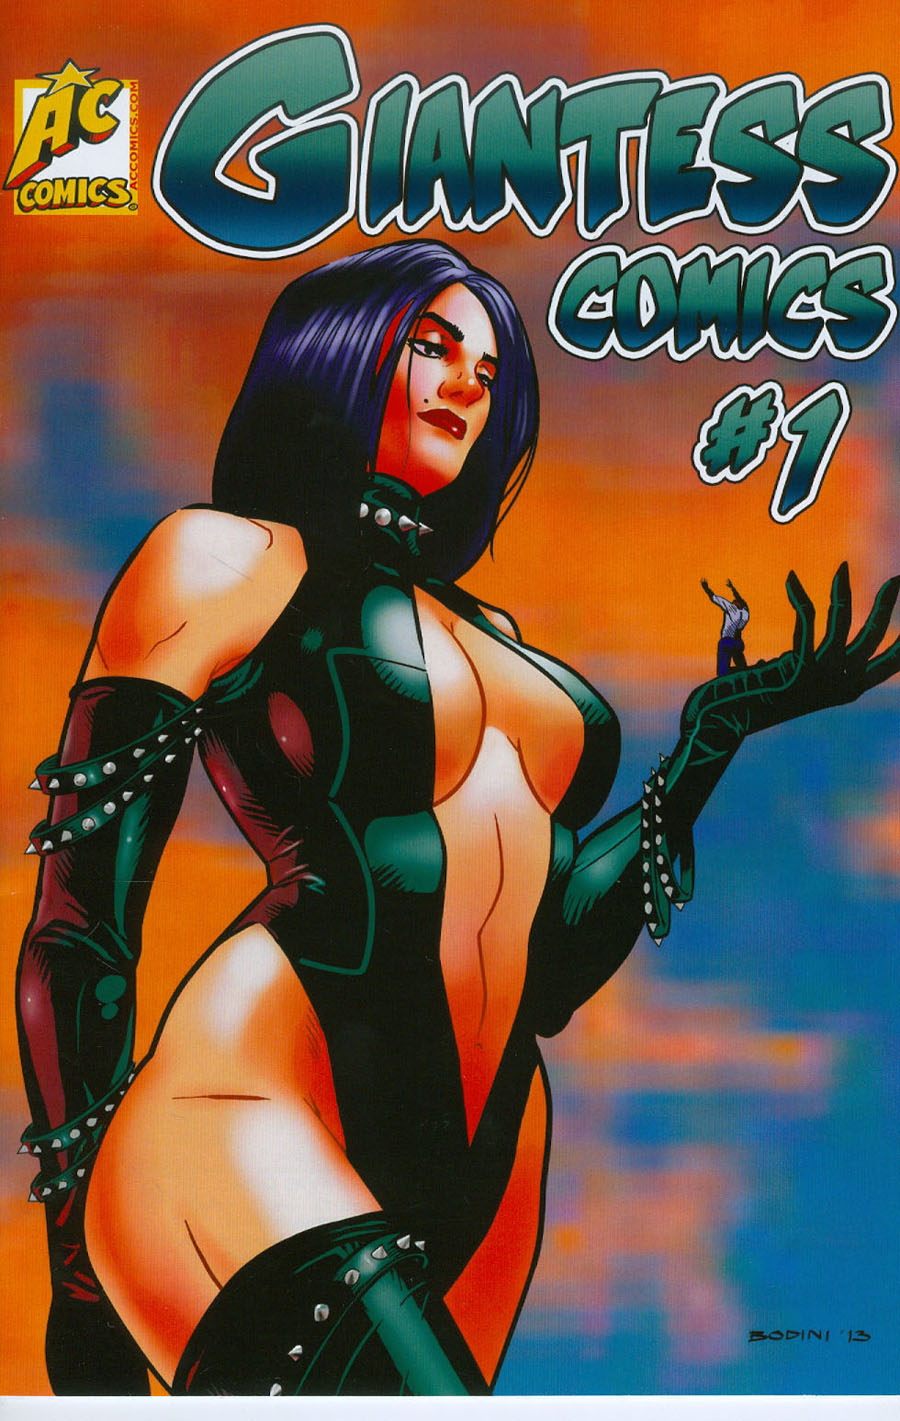 Giantess Comics #1